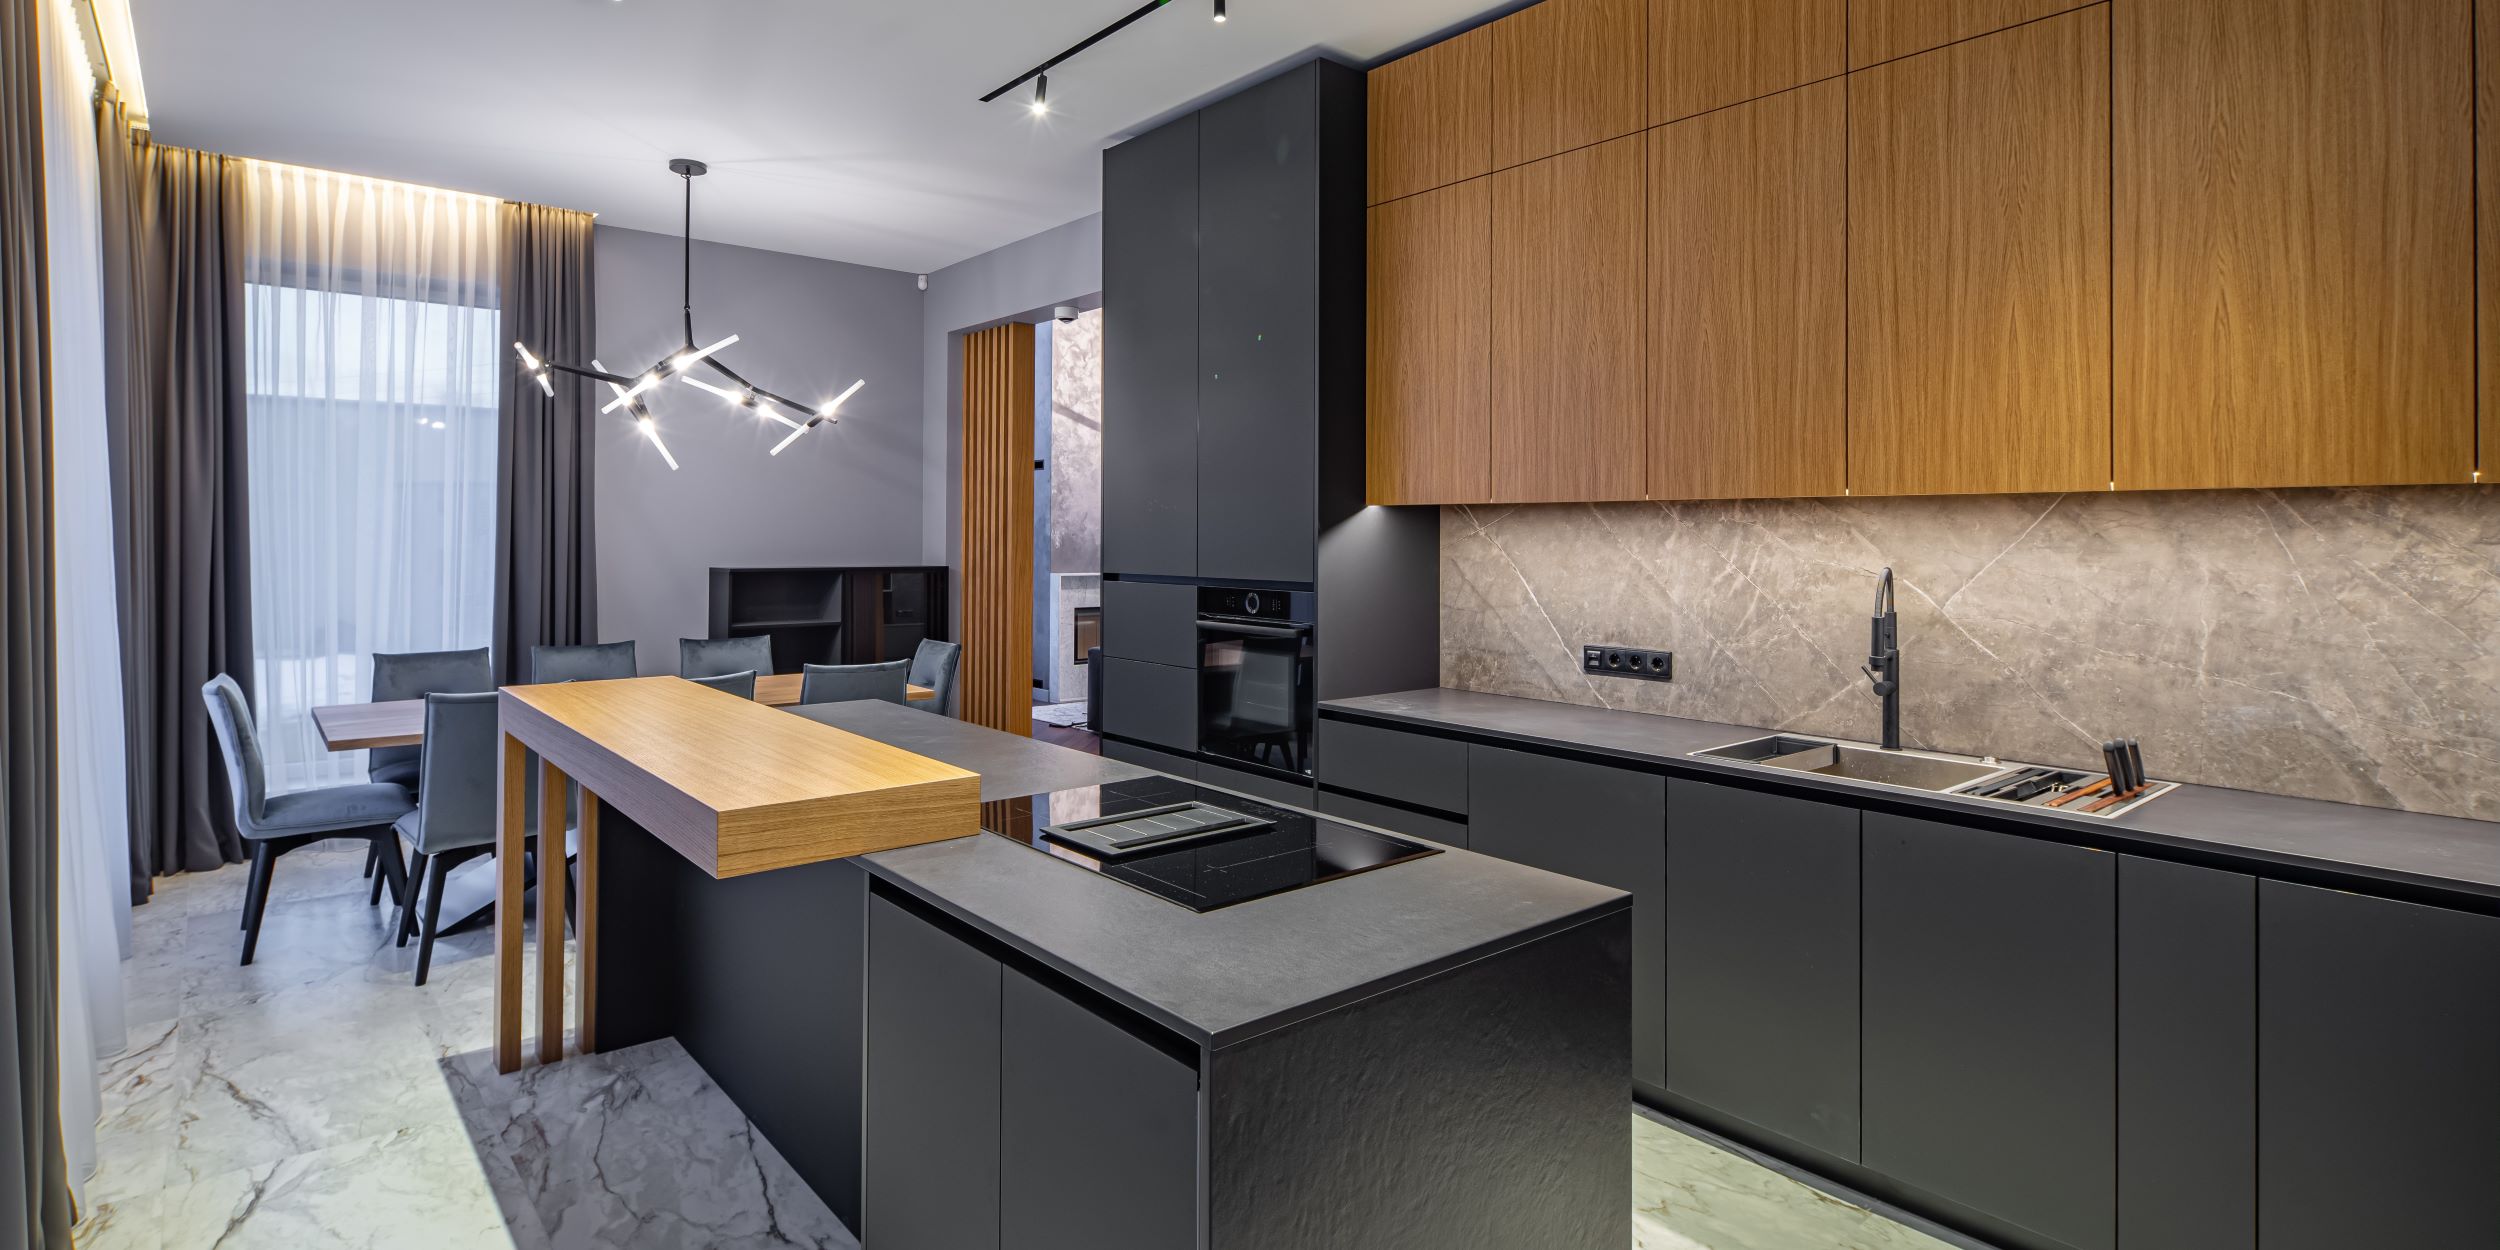 Diseños modernos para tu cocina. Ideas. Cocina moderna con acabados de madera, granito y azulejos. Lámparas modernas.